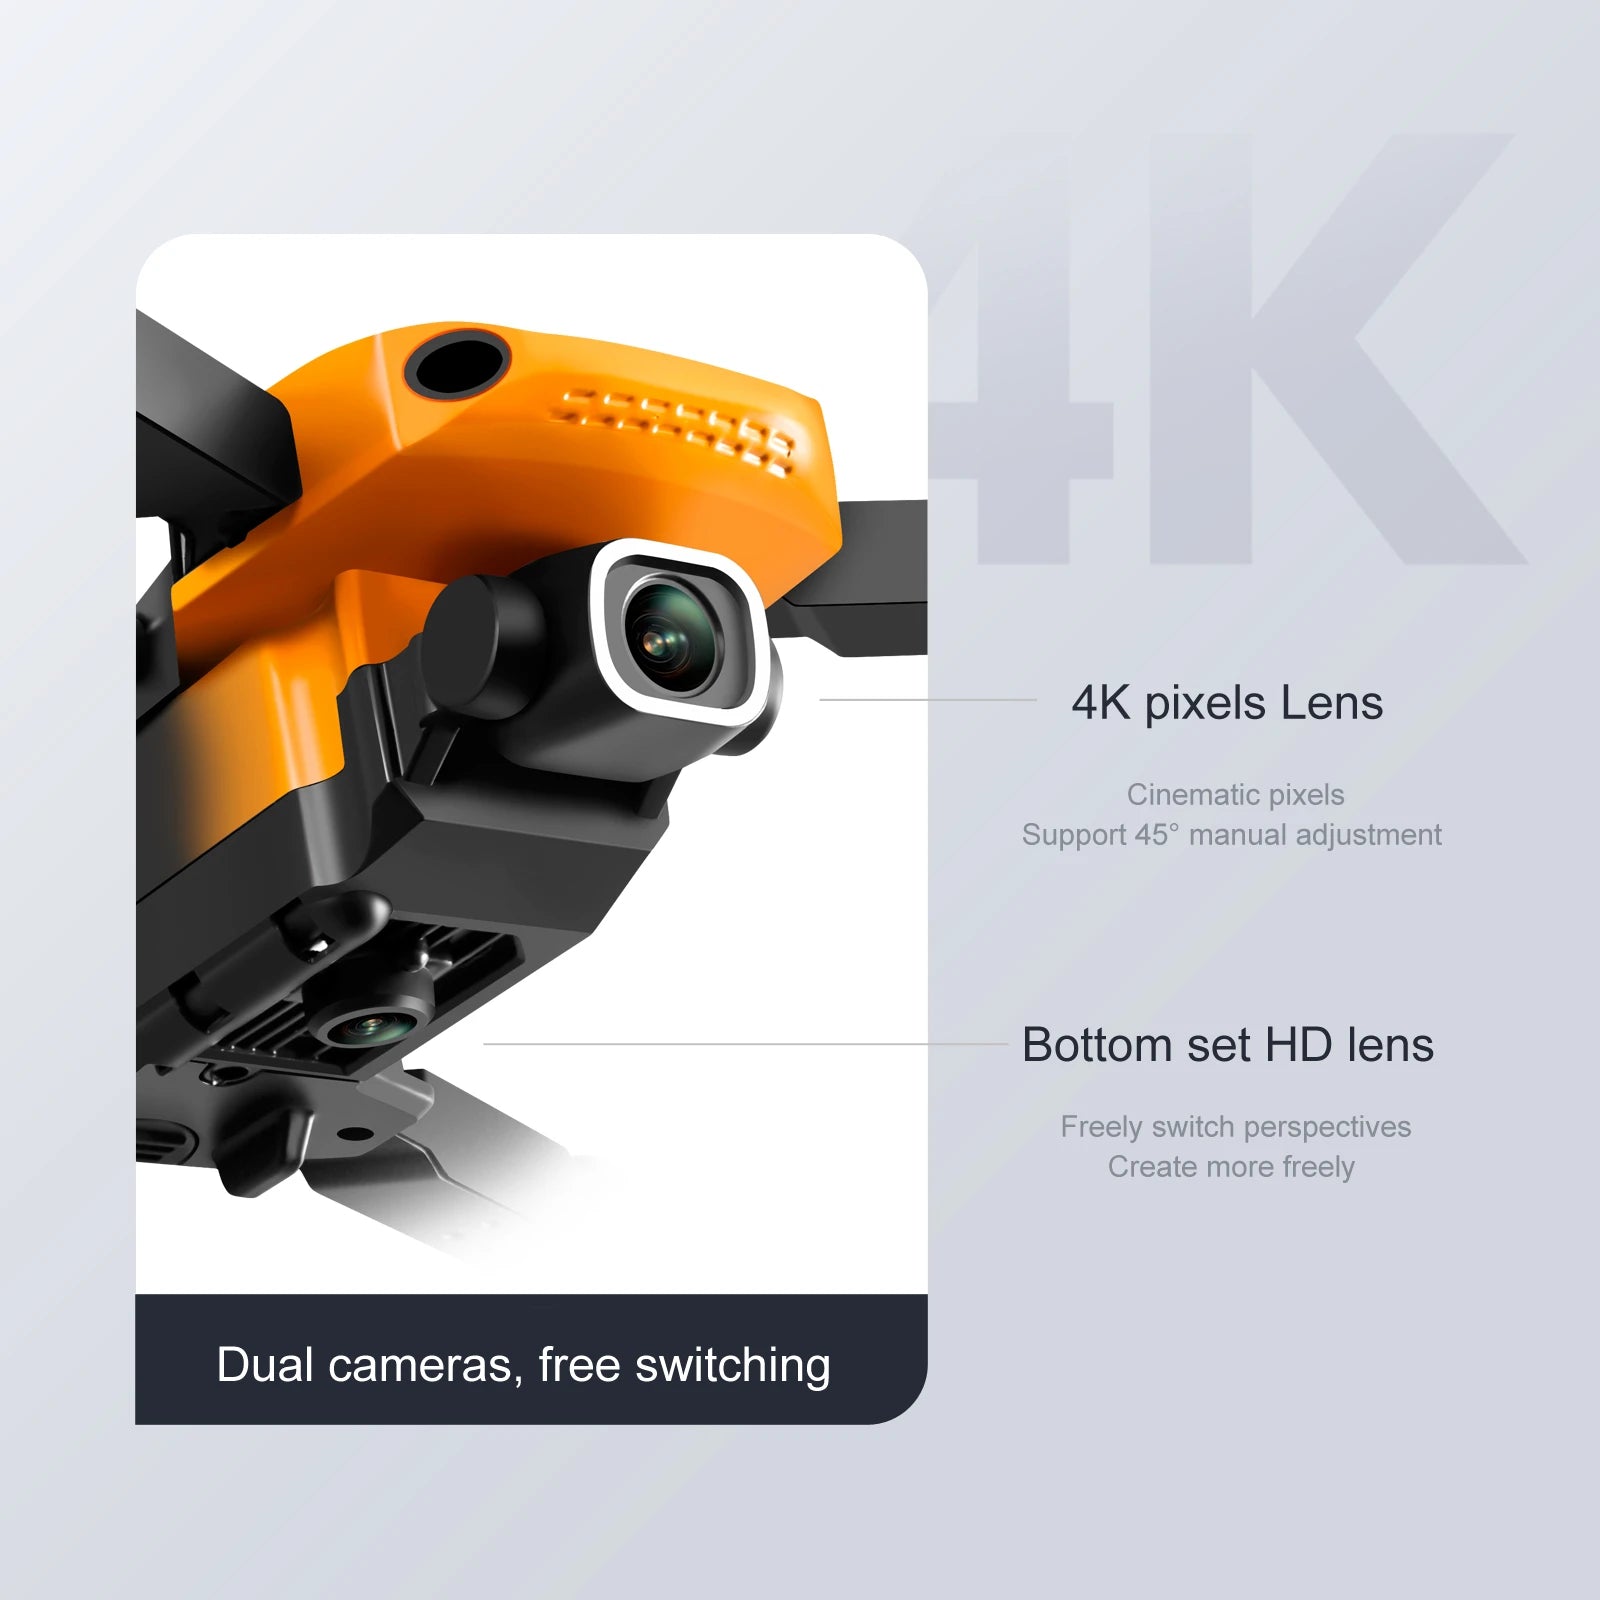 KBDFA KY907 Mini Drone, 4k pixels lens cinematic pixels support 459 manual adjustment bottom set